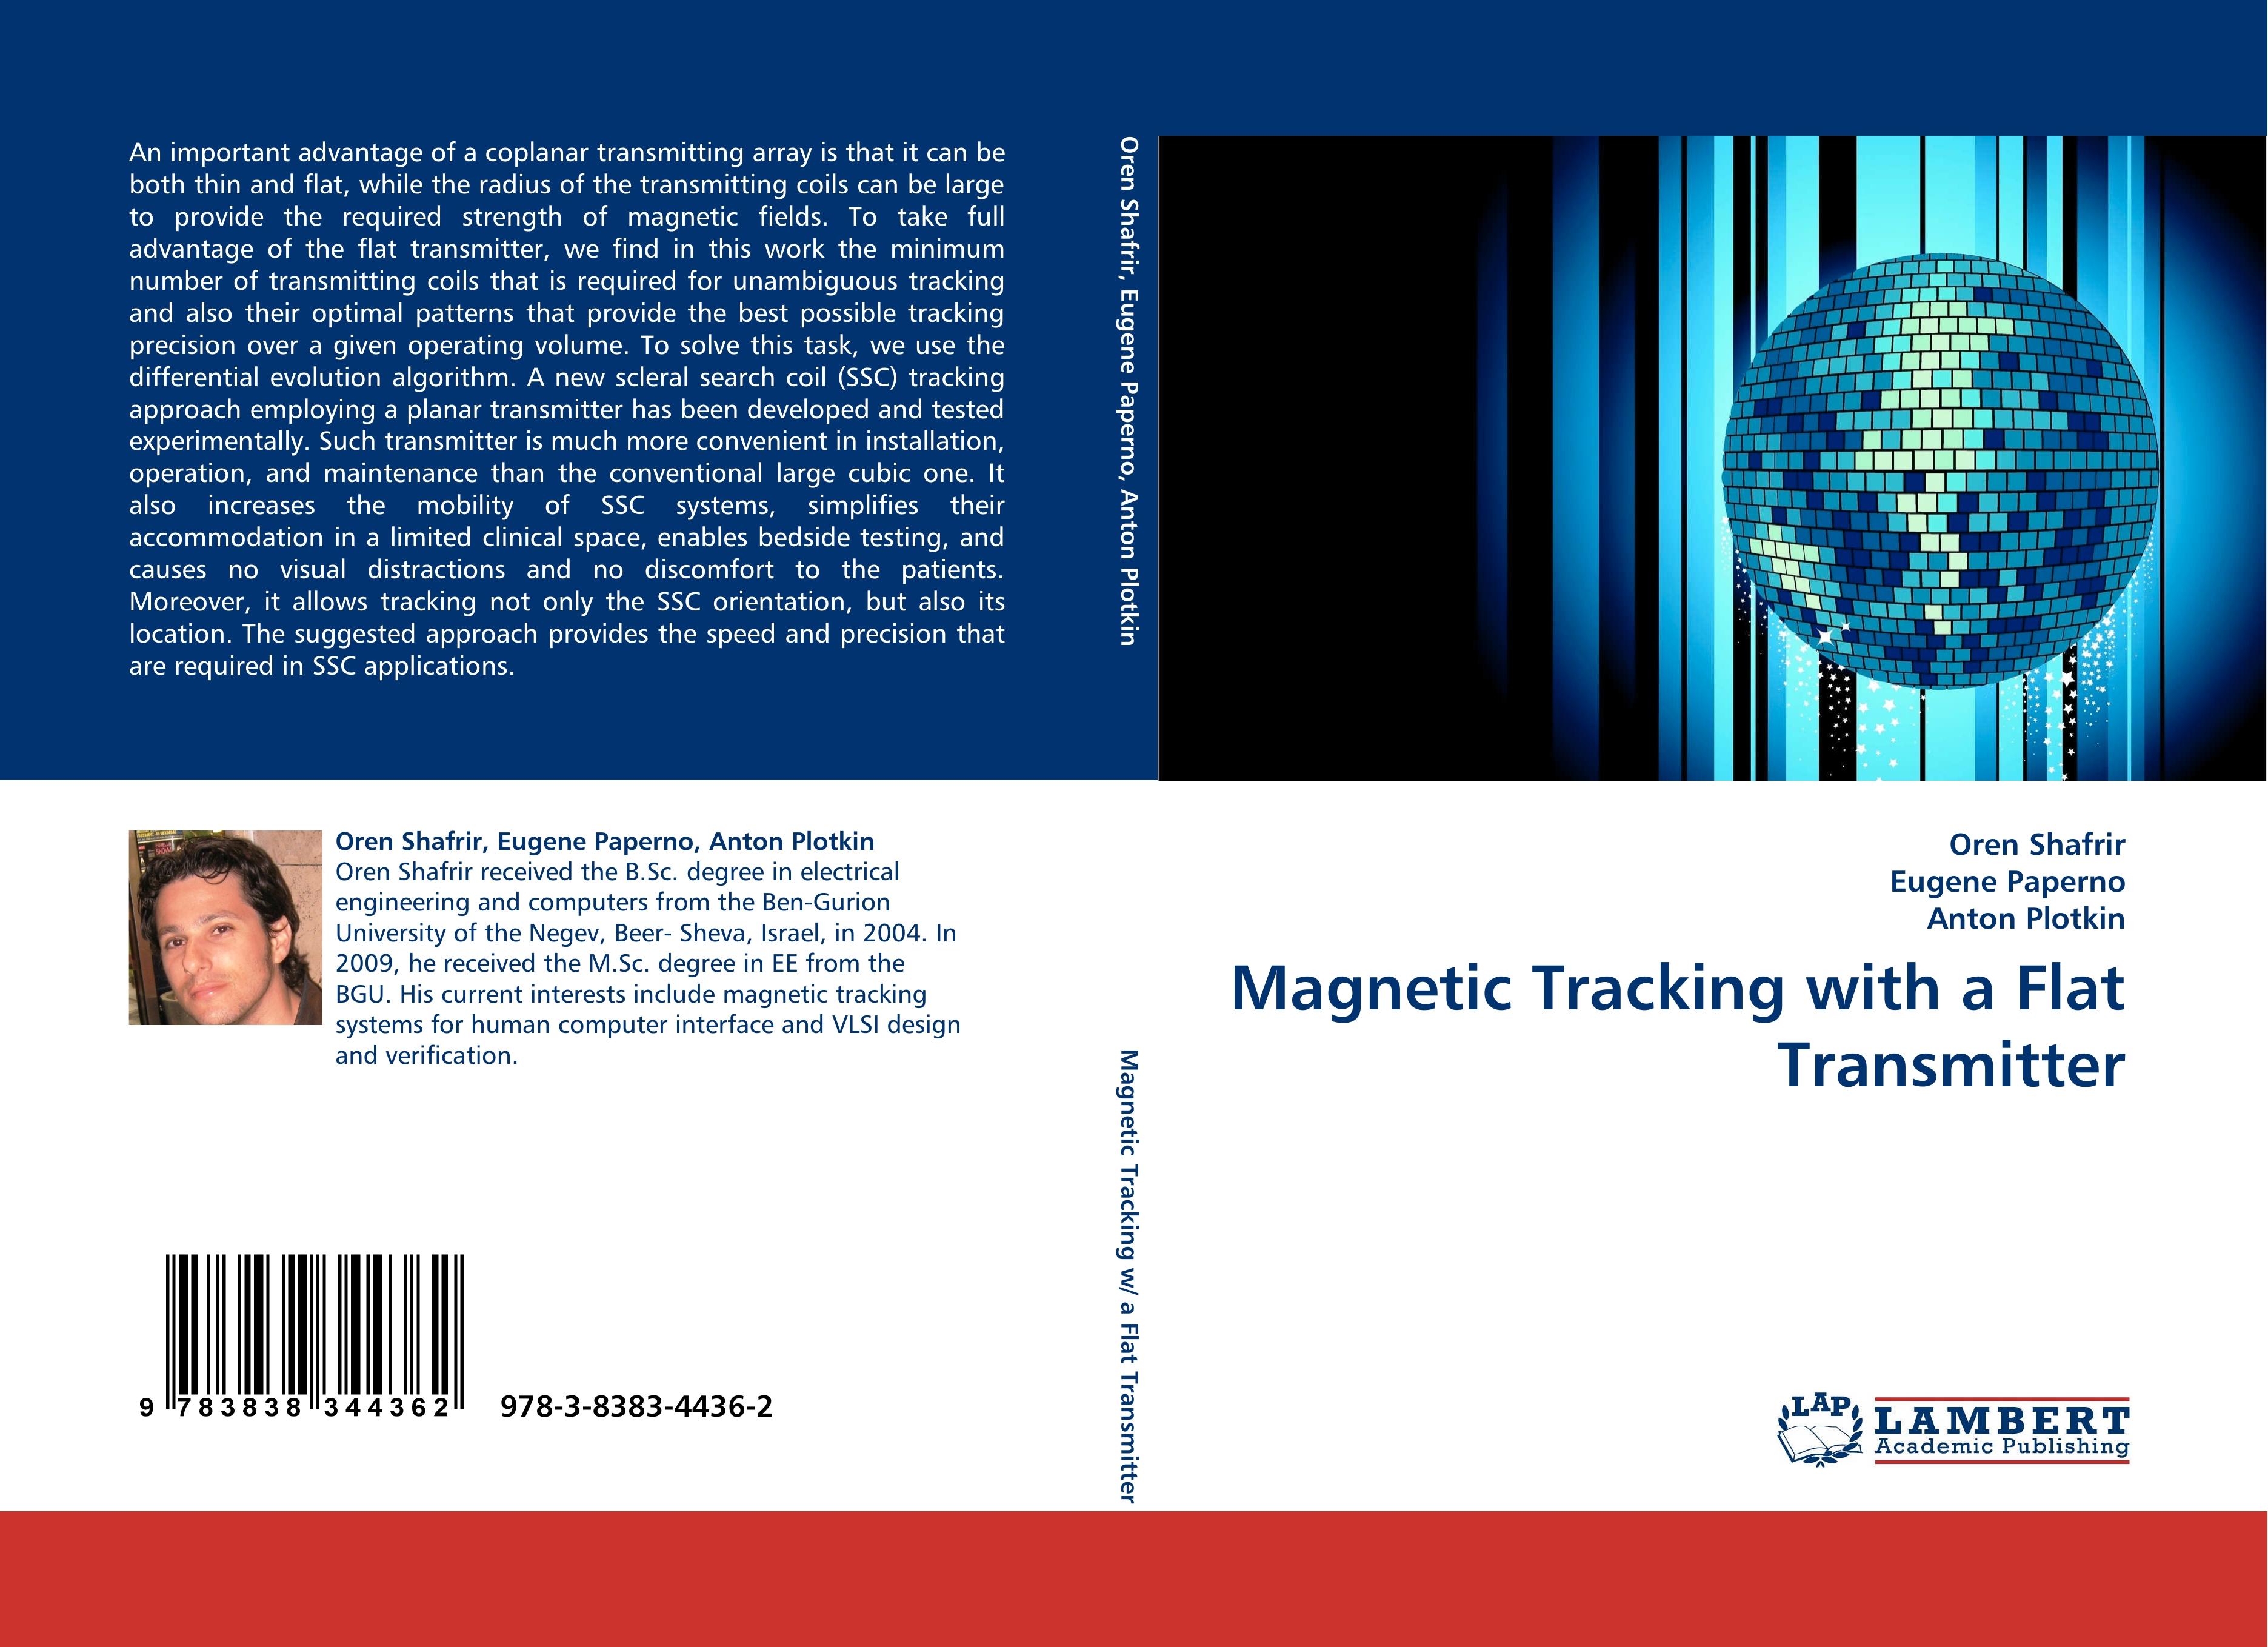 Magnetic Tracking with a Flat Transmitter - Oren Shafrir Eugene Paperno Anton Plotkin